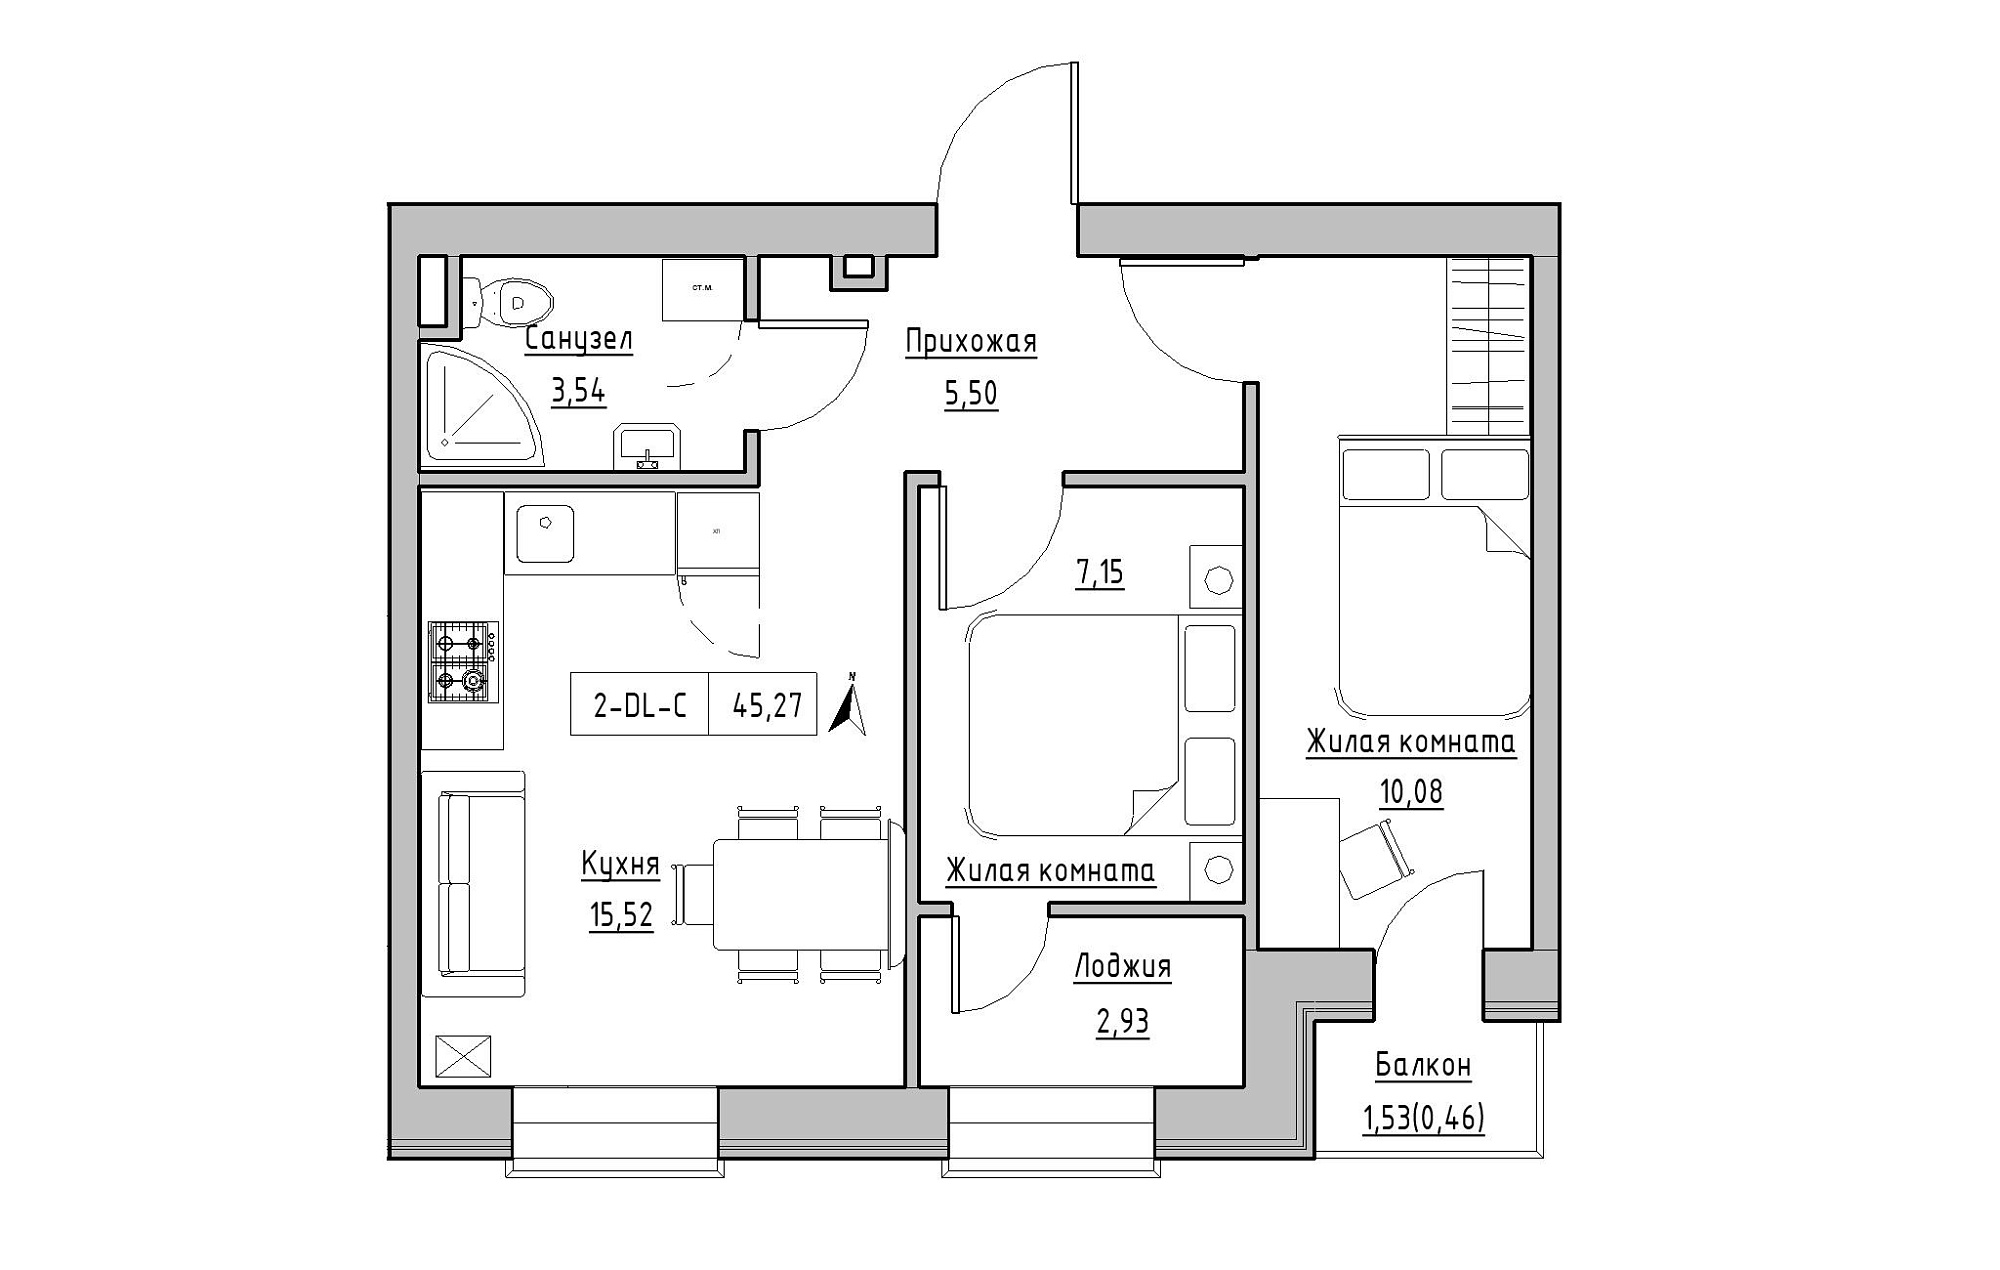 Planning 2-rm flats area 45.27m2, KS-019-04/0008.